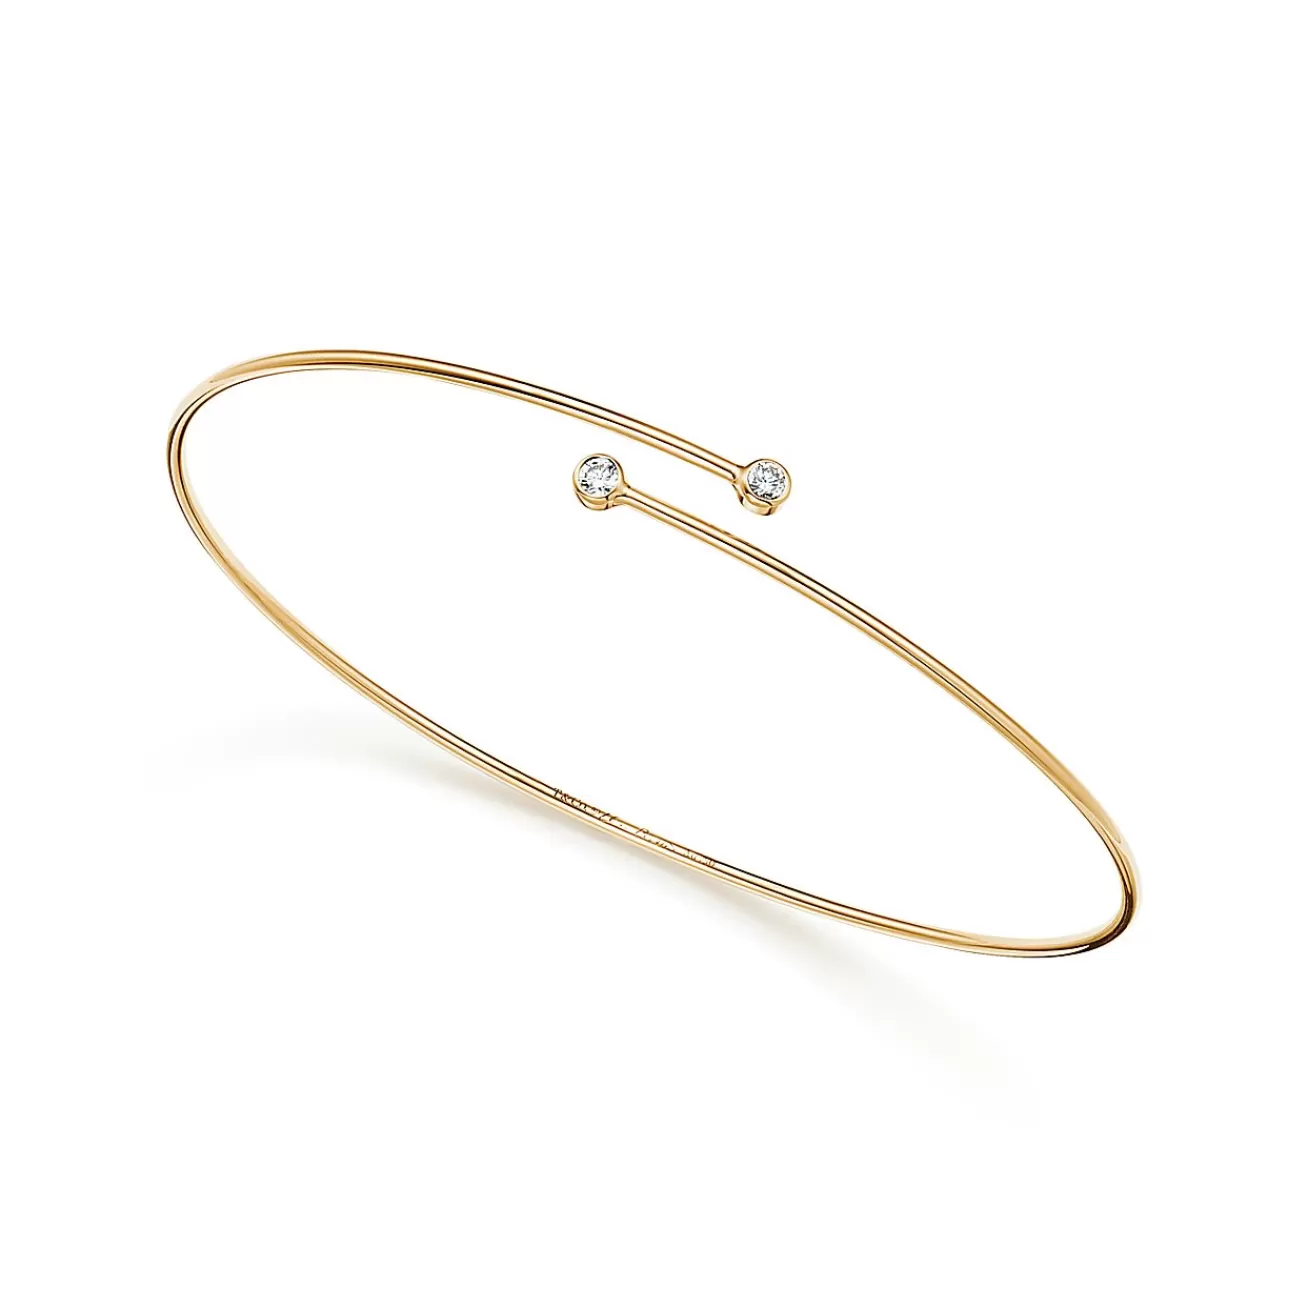 Tiffany & Co. Elsa Peretti® Diamond Hoop single-row bangle in 18k gold with diamonds, medium. | ^ Bracelets | Dainty Jewelry